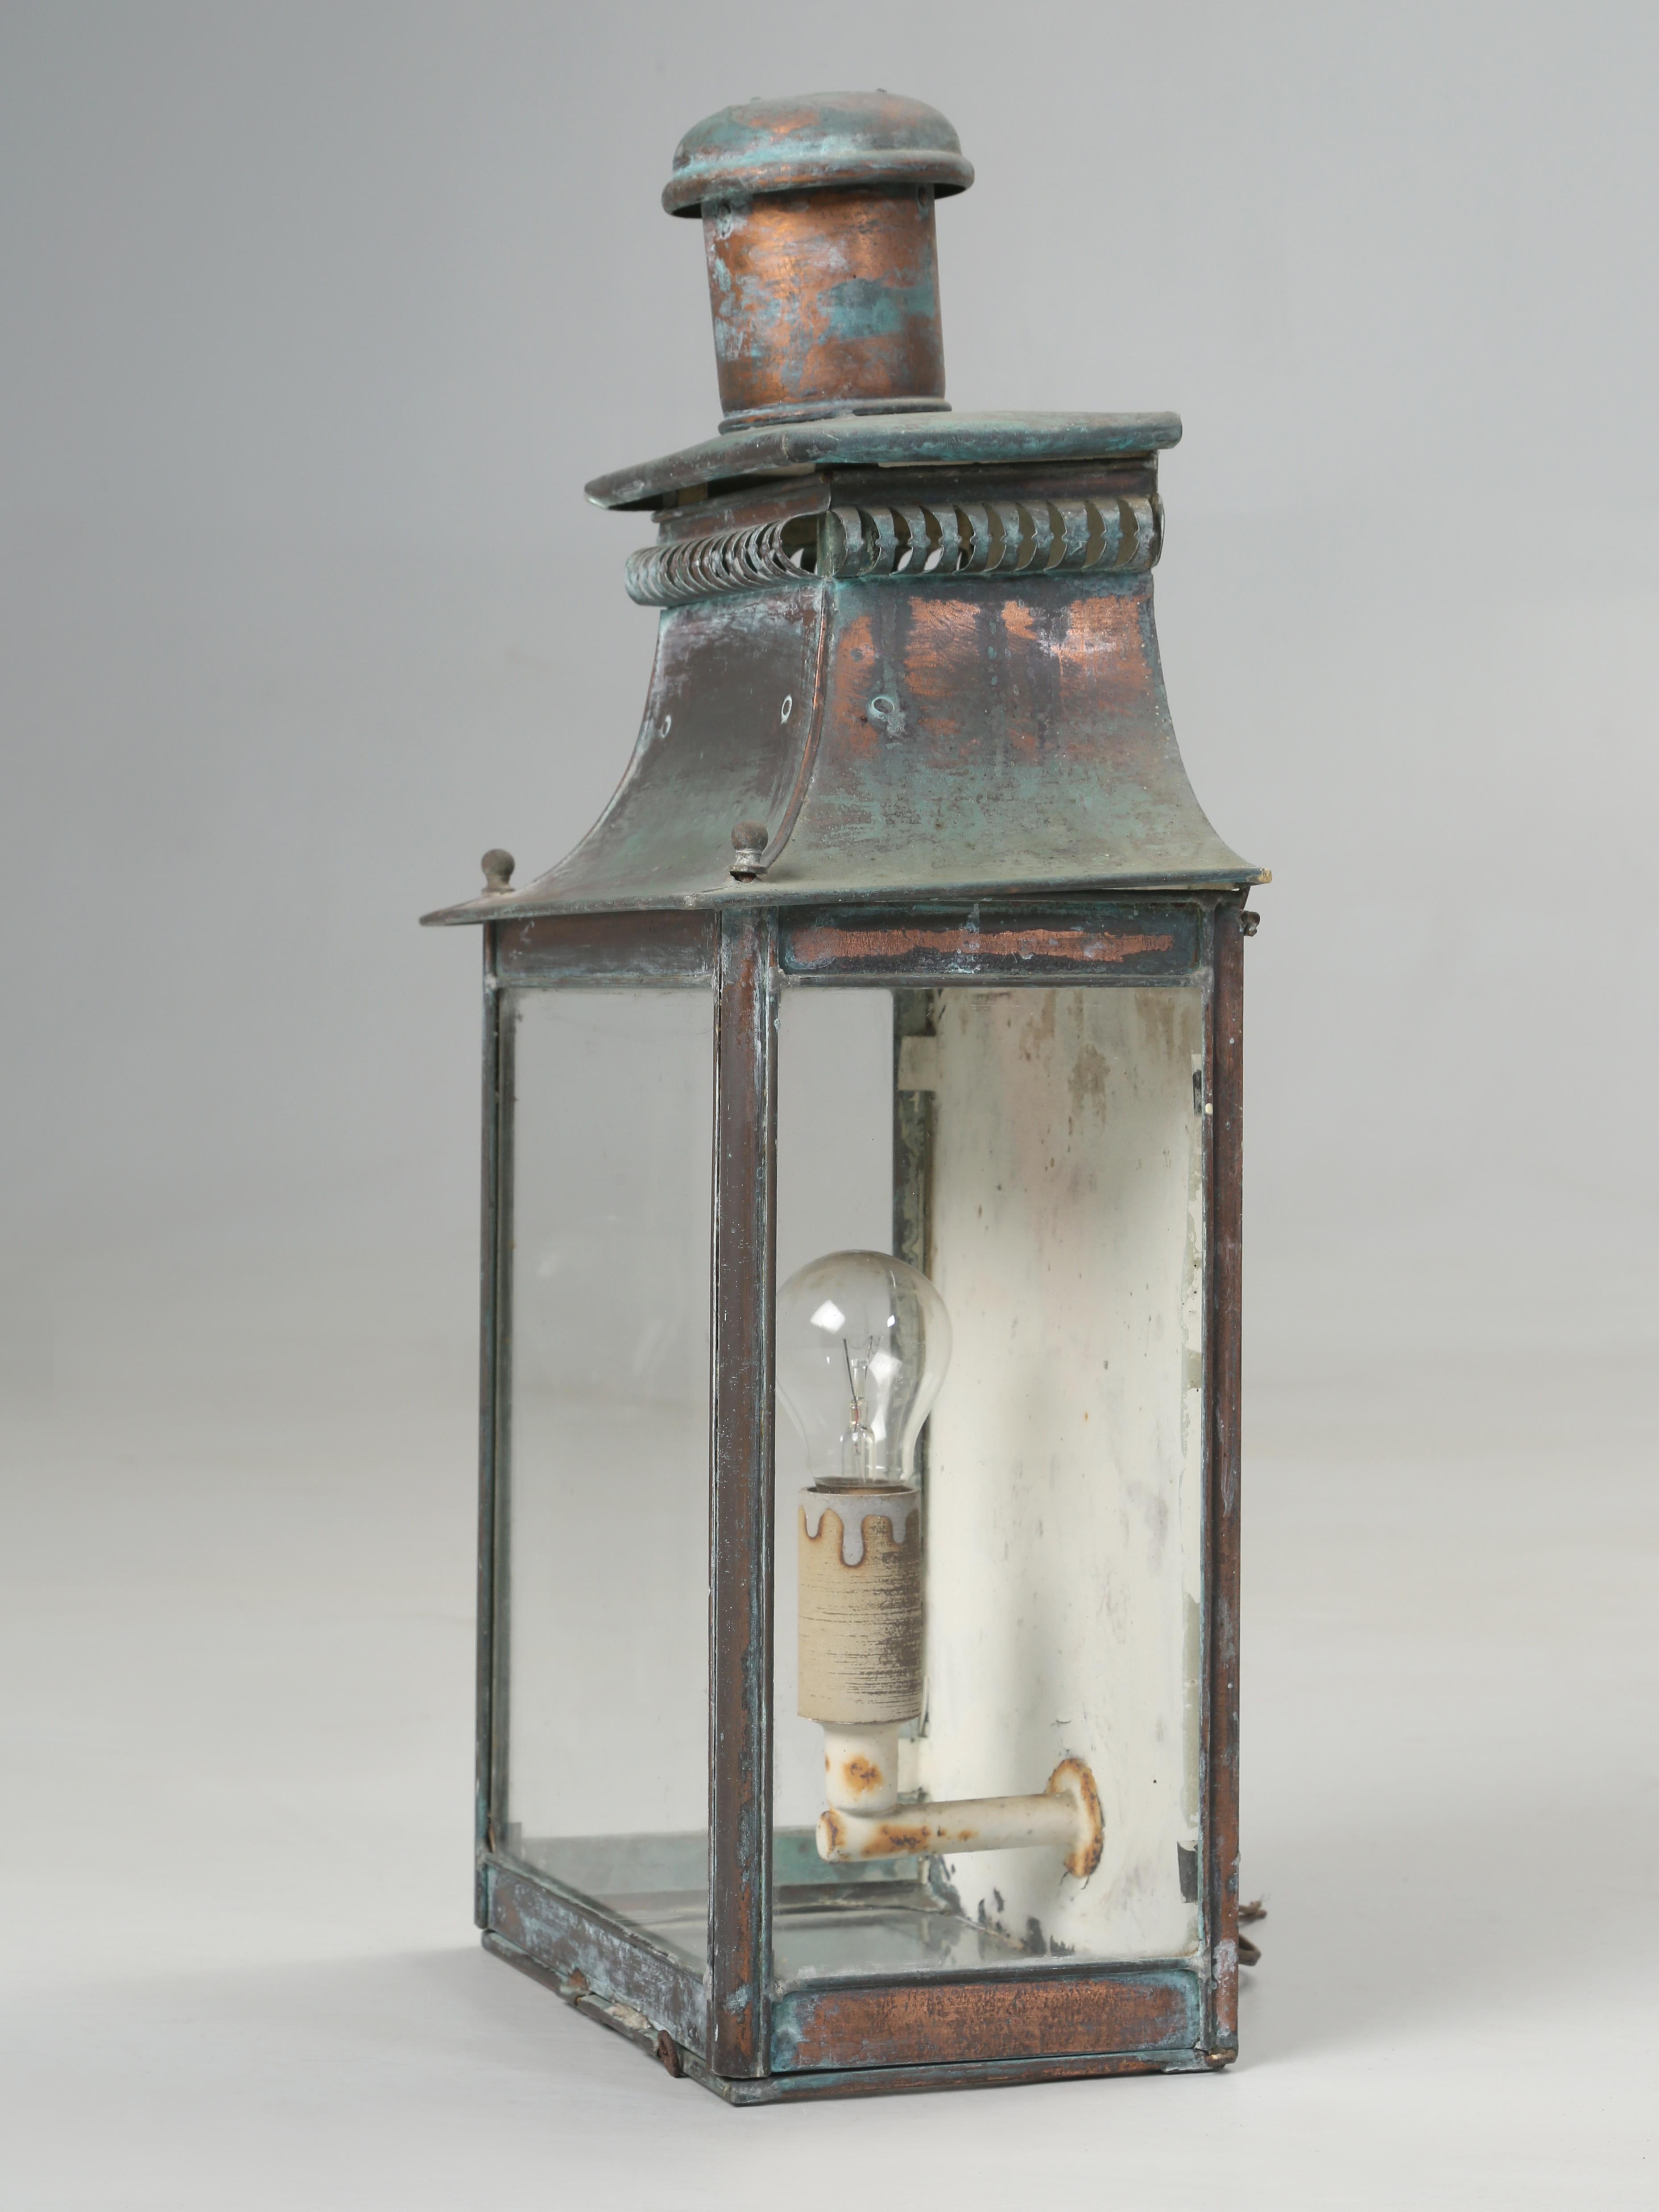 Country Antique French Copper Lantern Original Unrestored Condition Beautiful Patina 